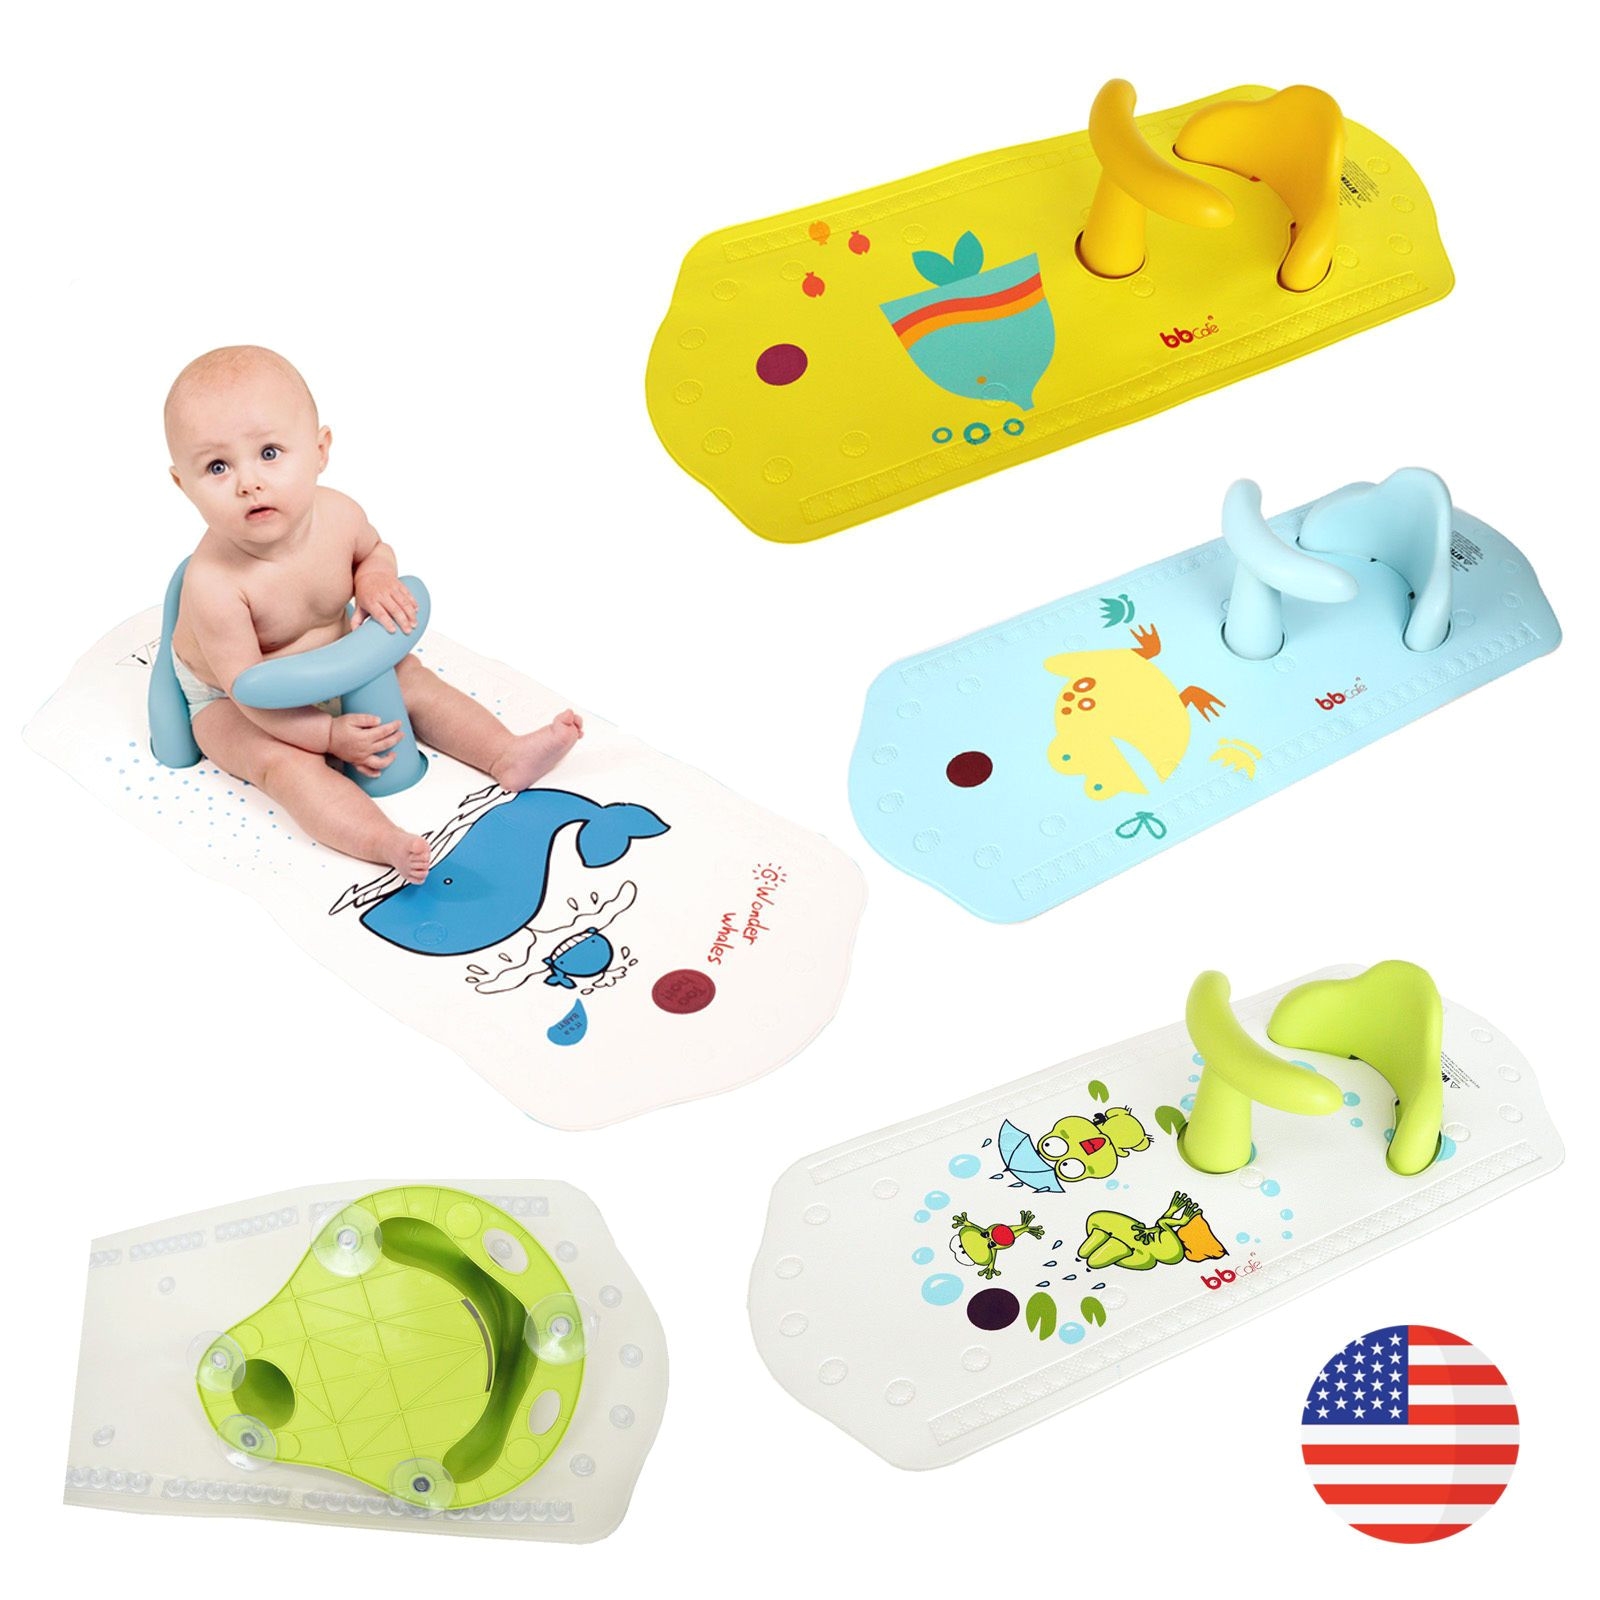 baby safety bath seat extra longnon slip bath mat with heat sensitive ring